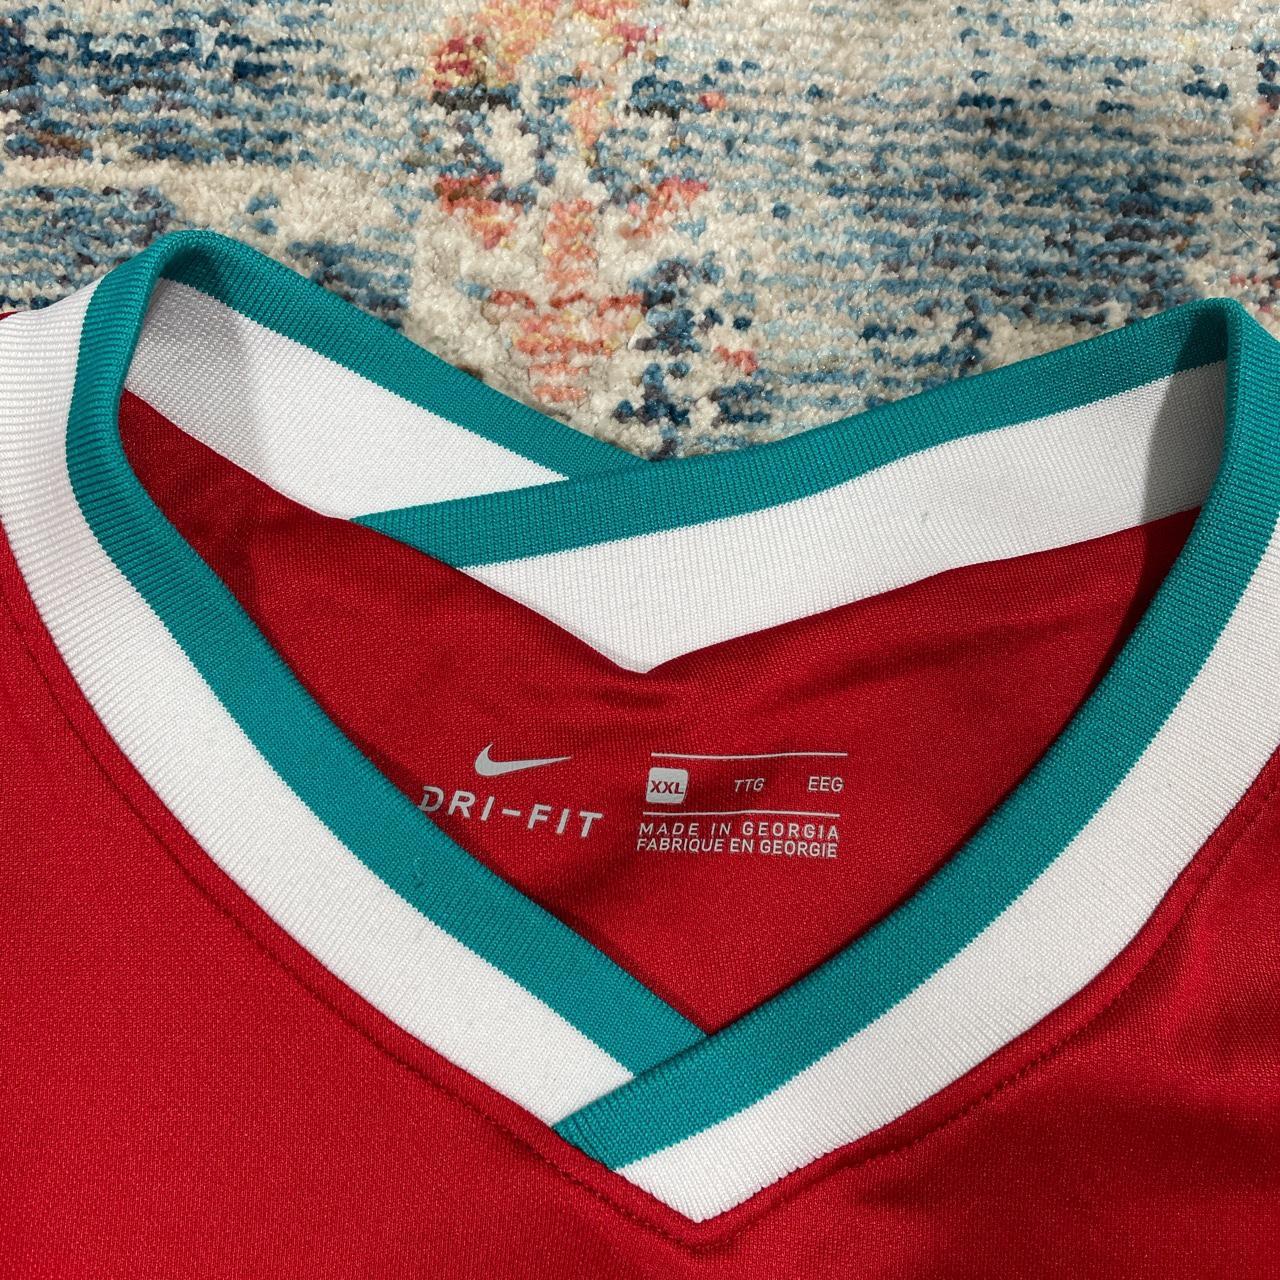 Liverpool Nike 2020/21 Home Football Shirt